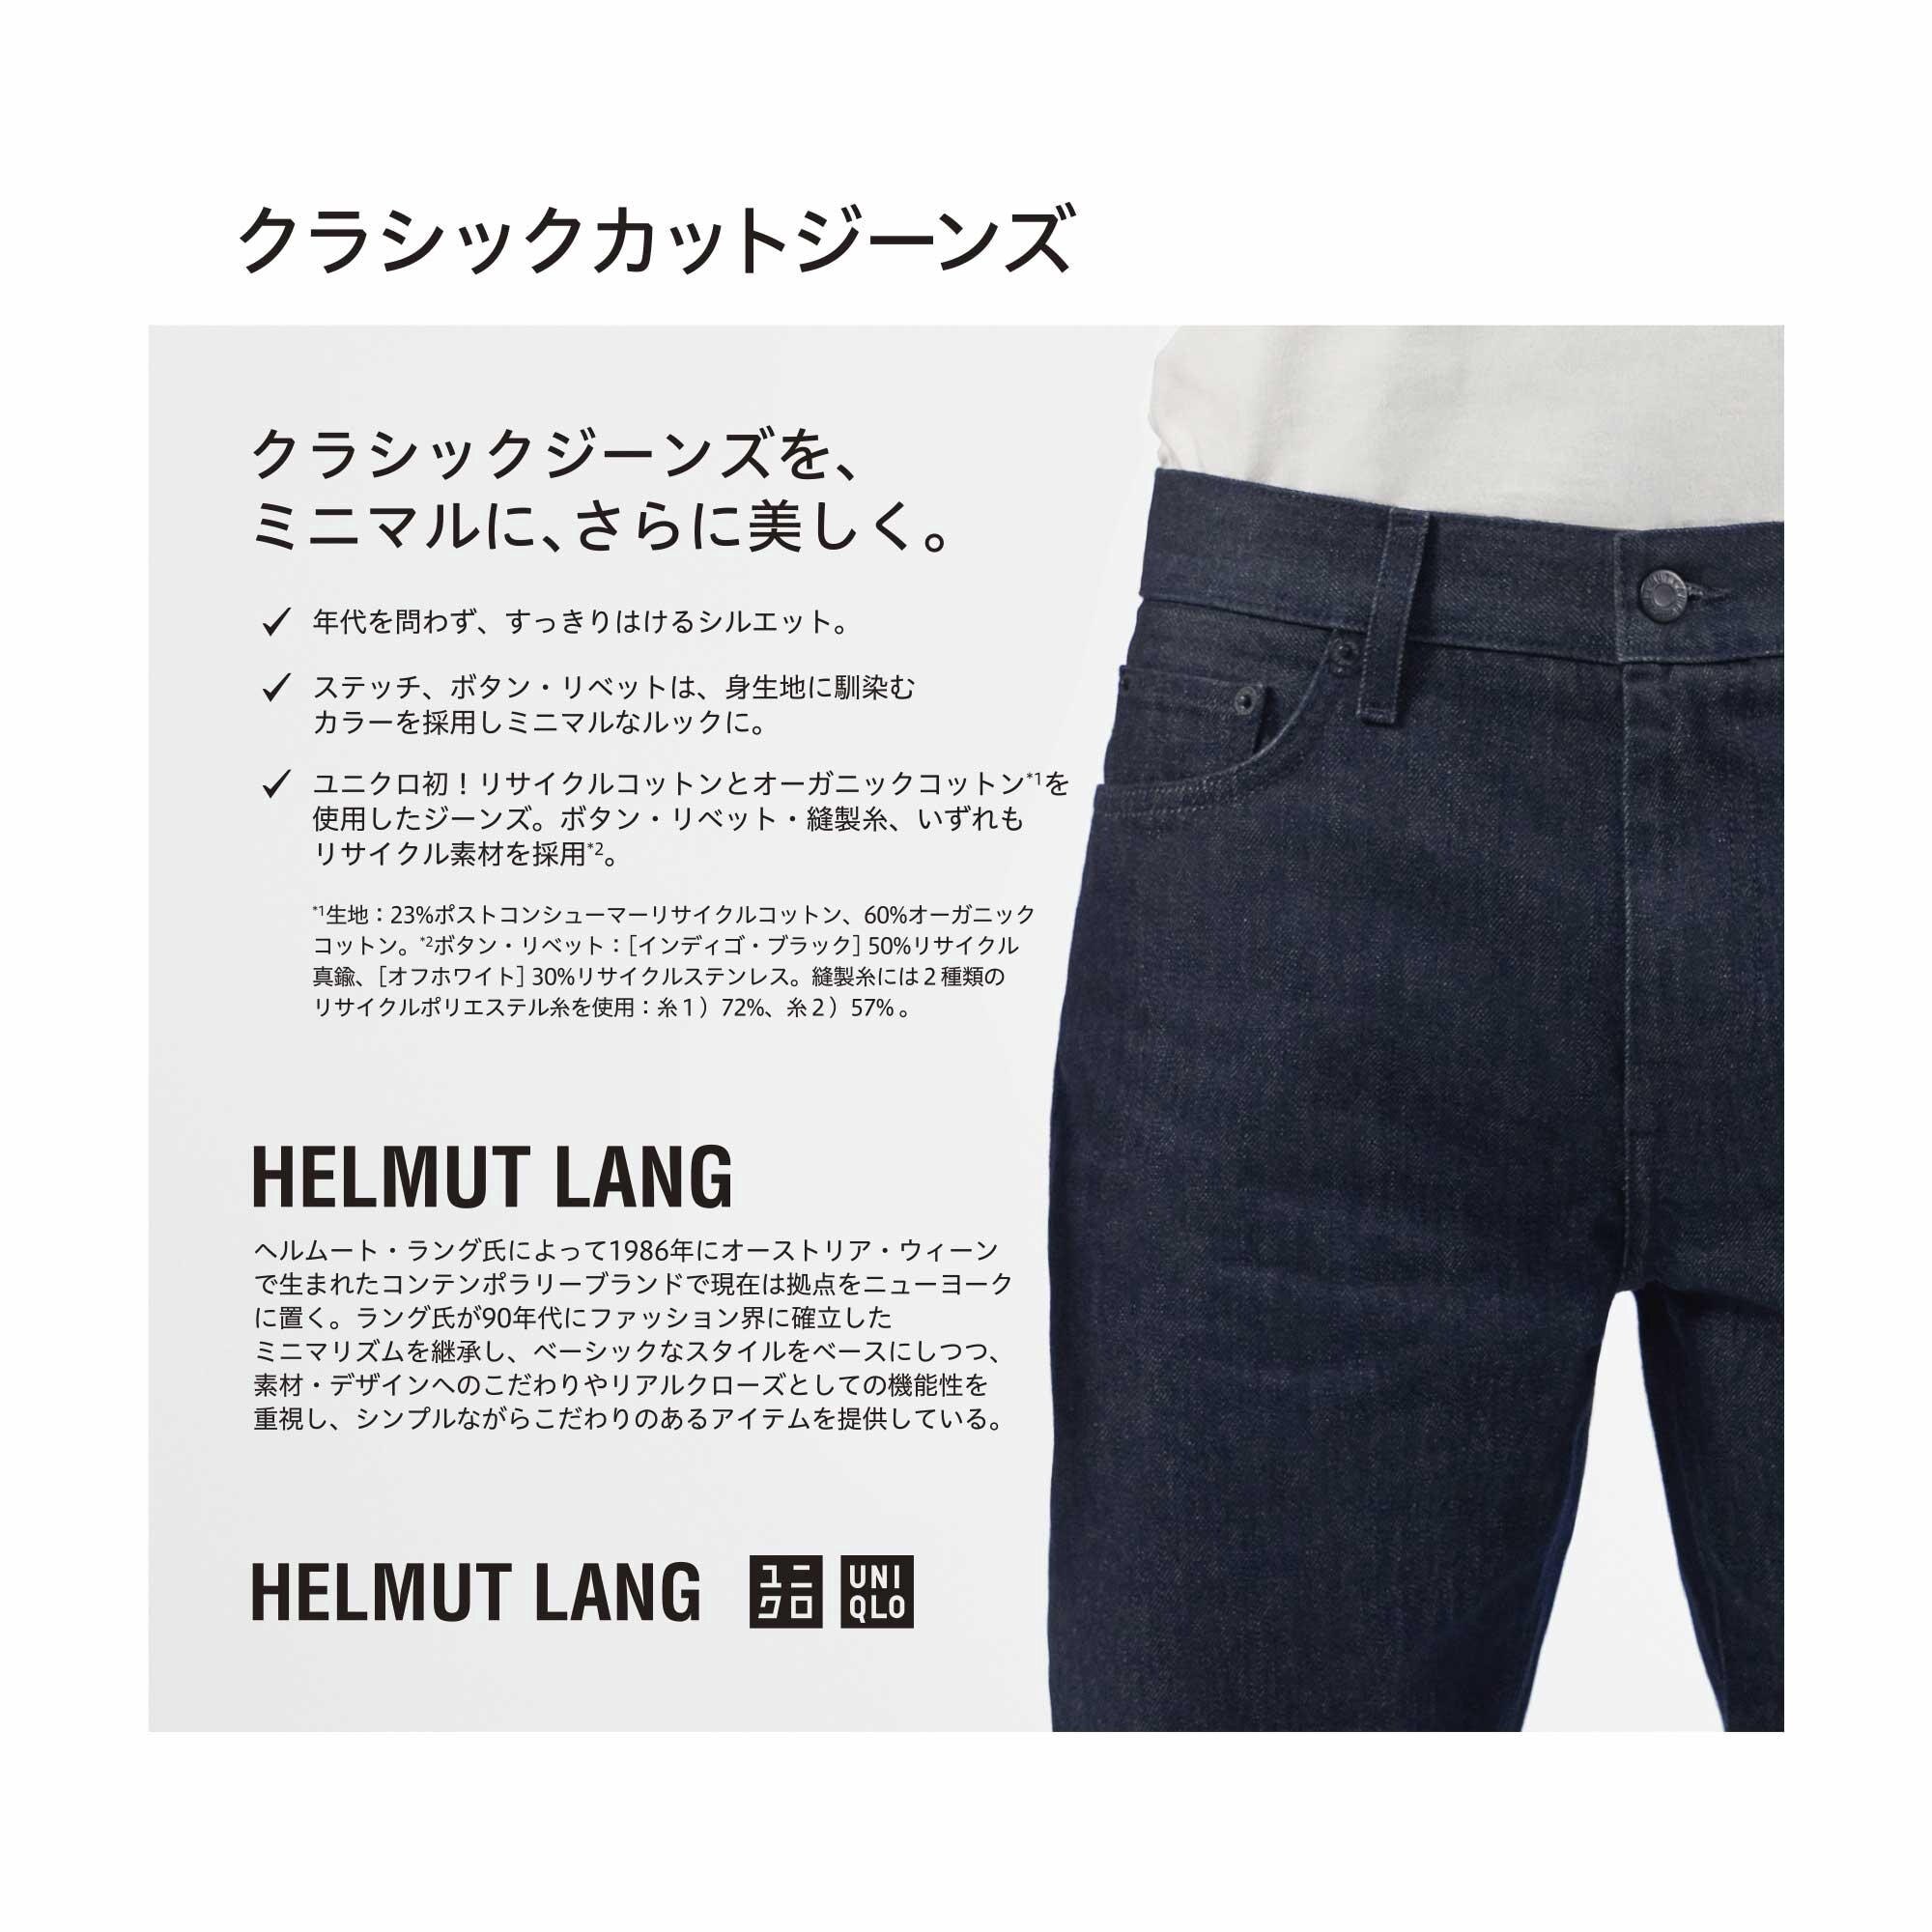 Helmut lang denim pants | hartwellspremium.com